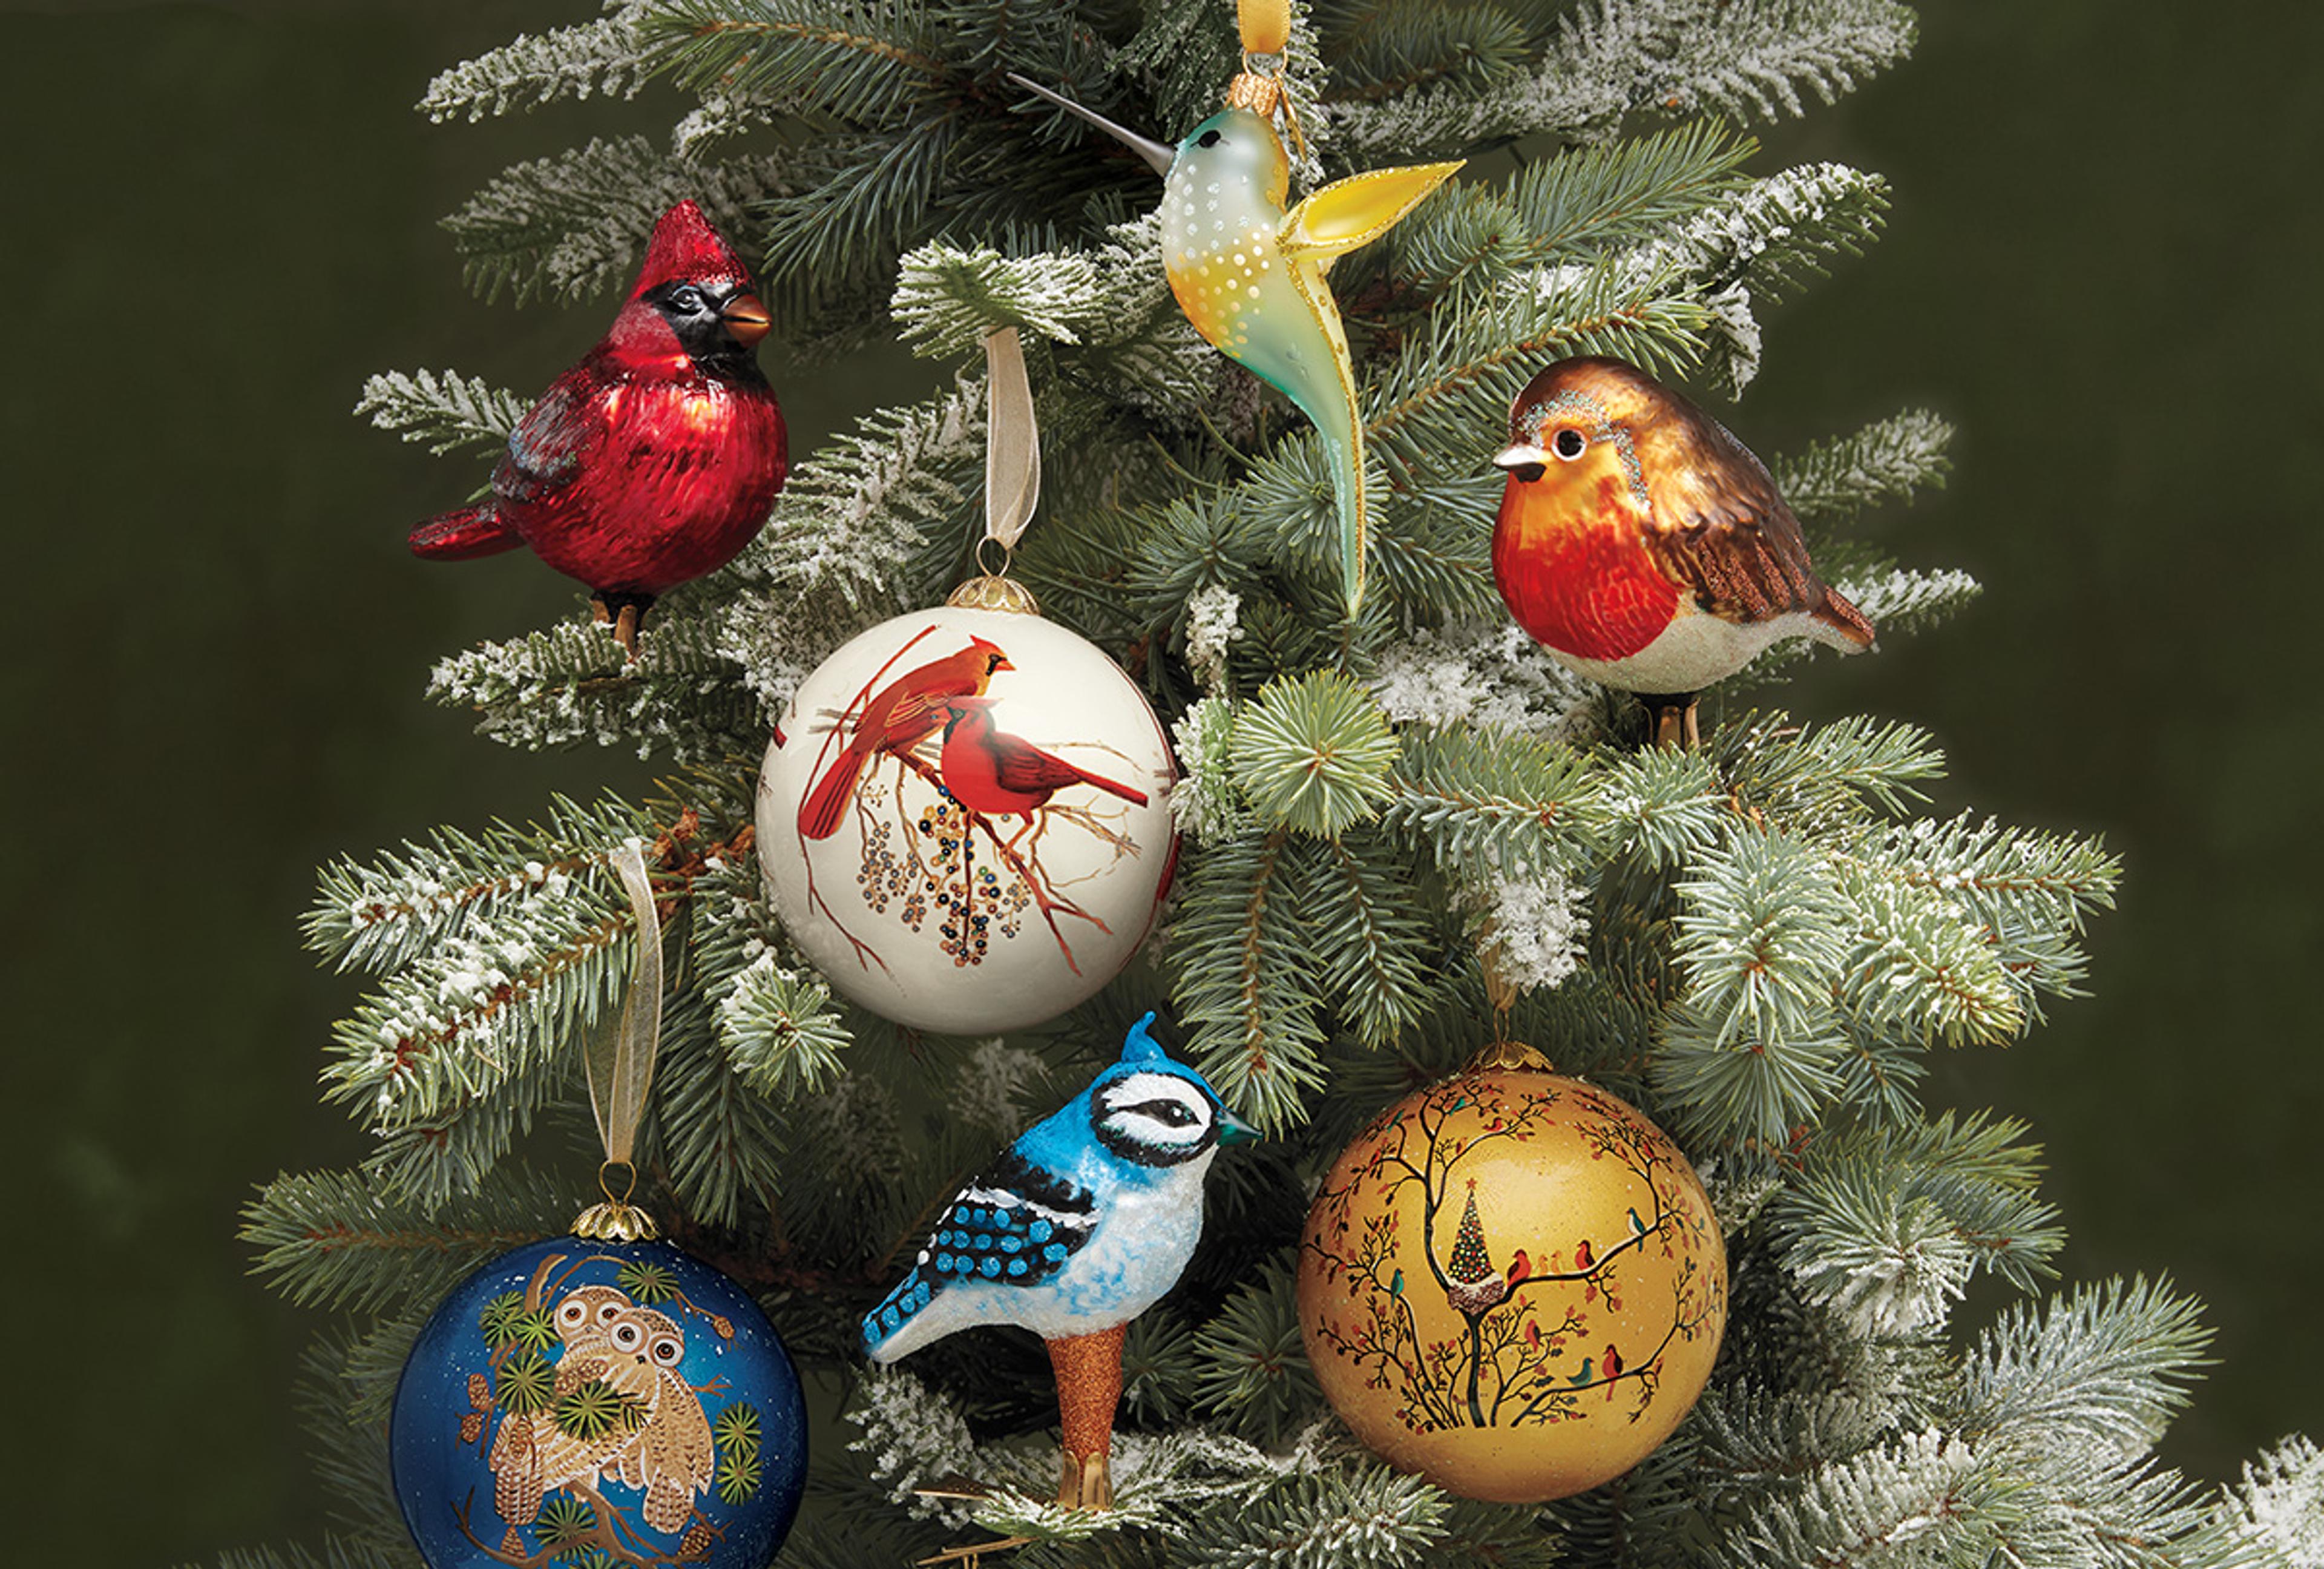 Festive bird-themed ornaments styled on a Christmas Tree.